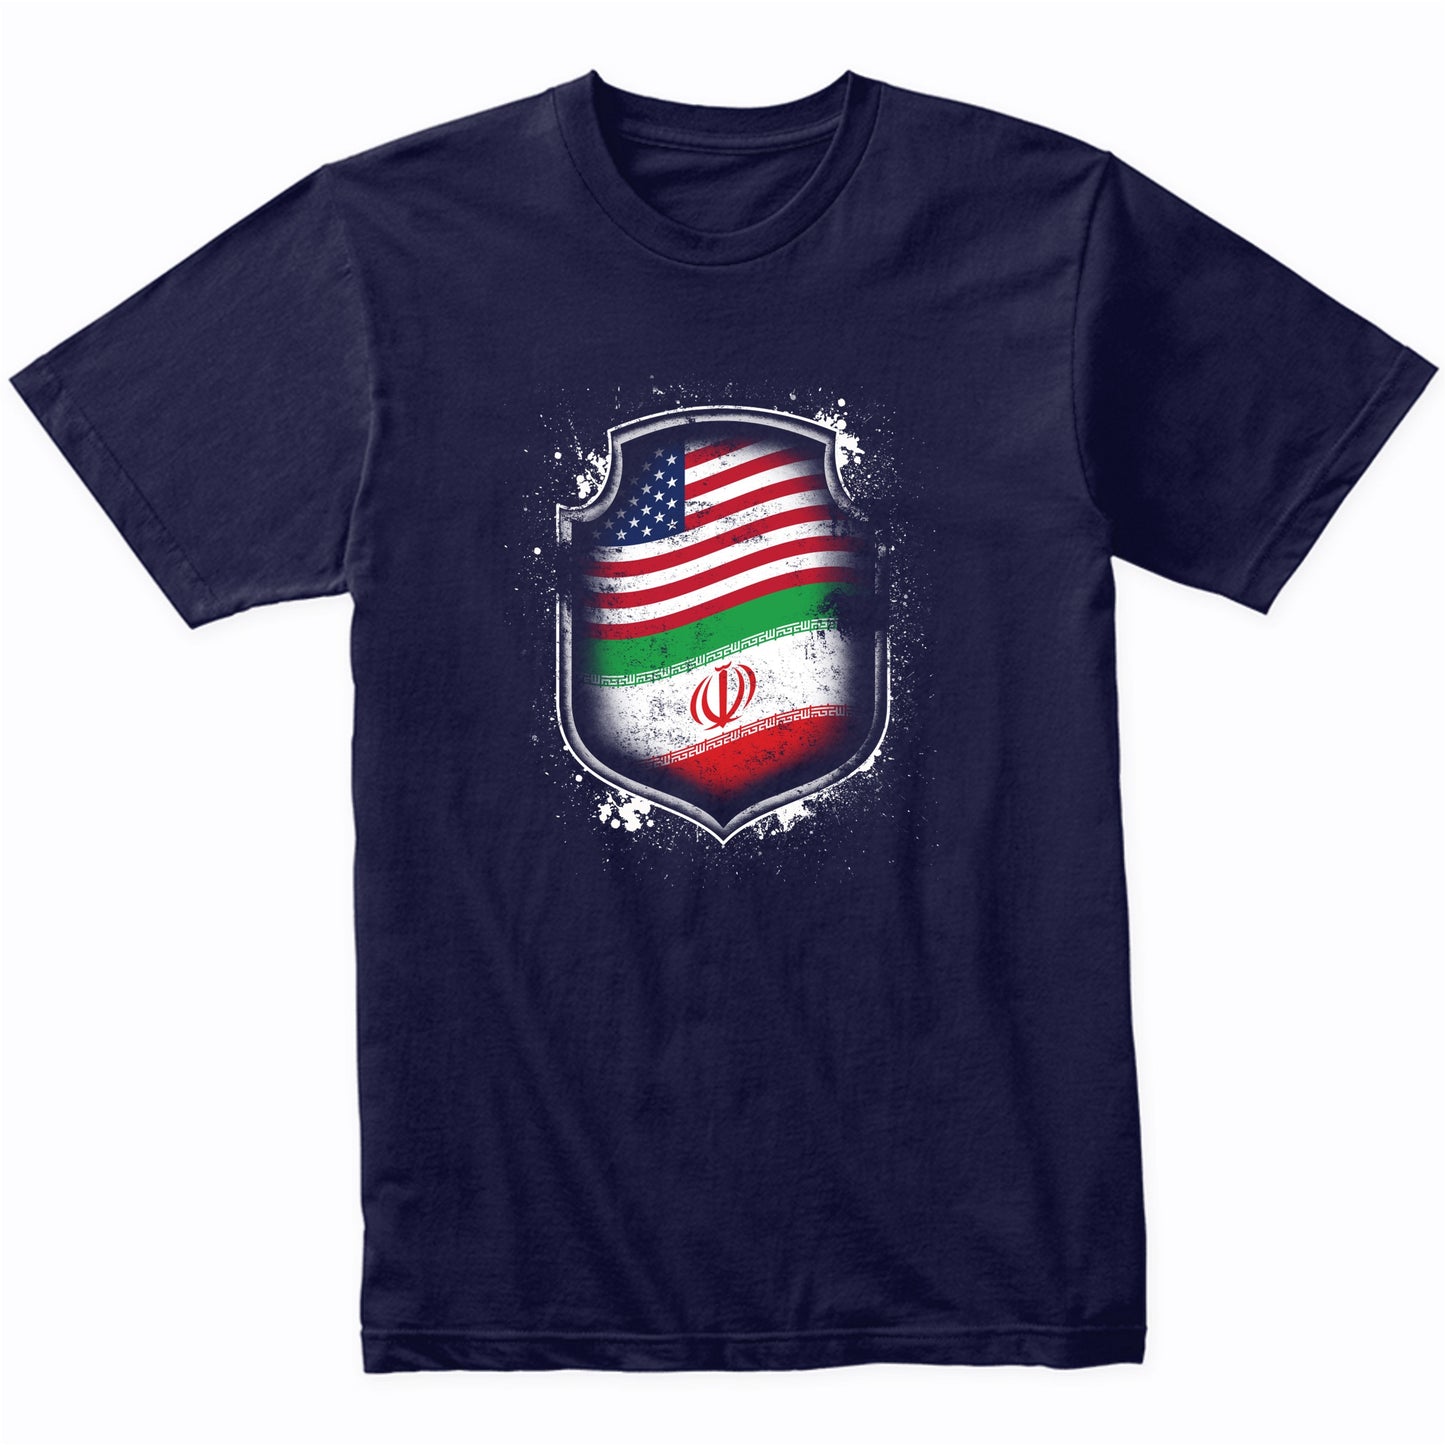 Iranian American Shirt Flags Of Iran and America T-Shirt